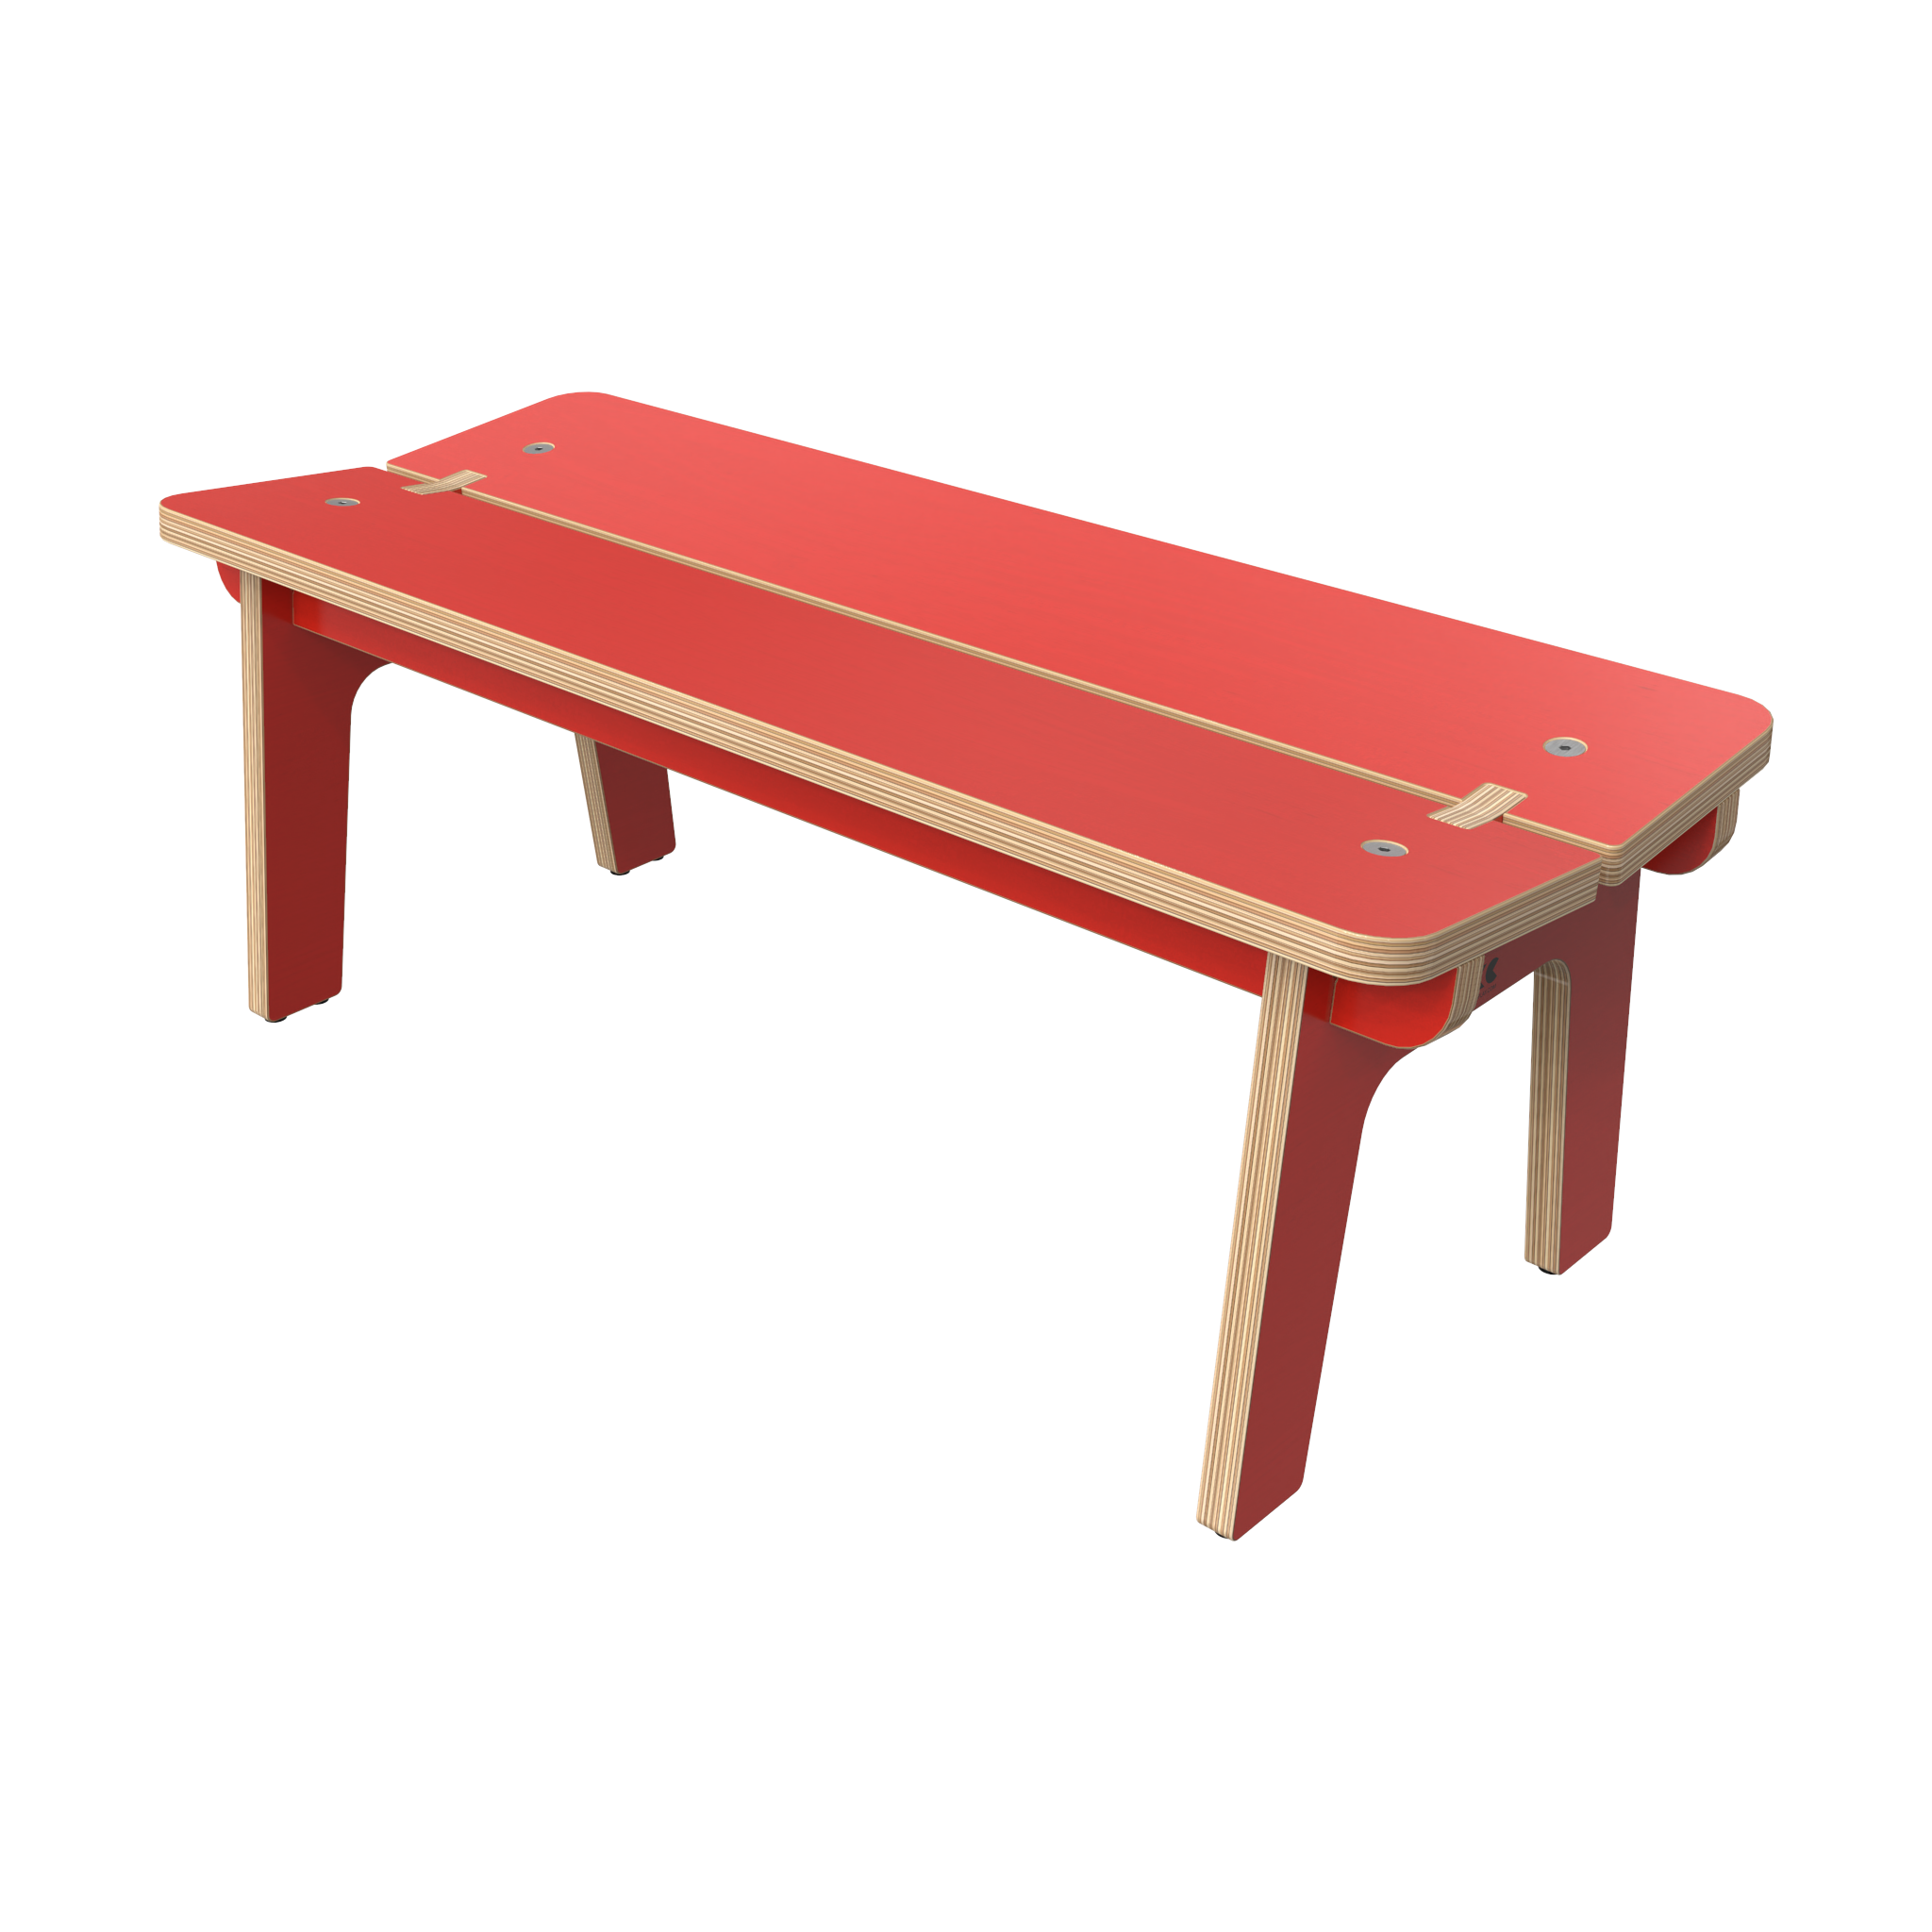 Kids bench Buxus red | IKC furniture